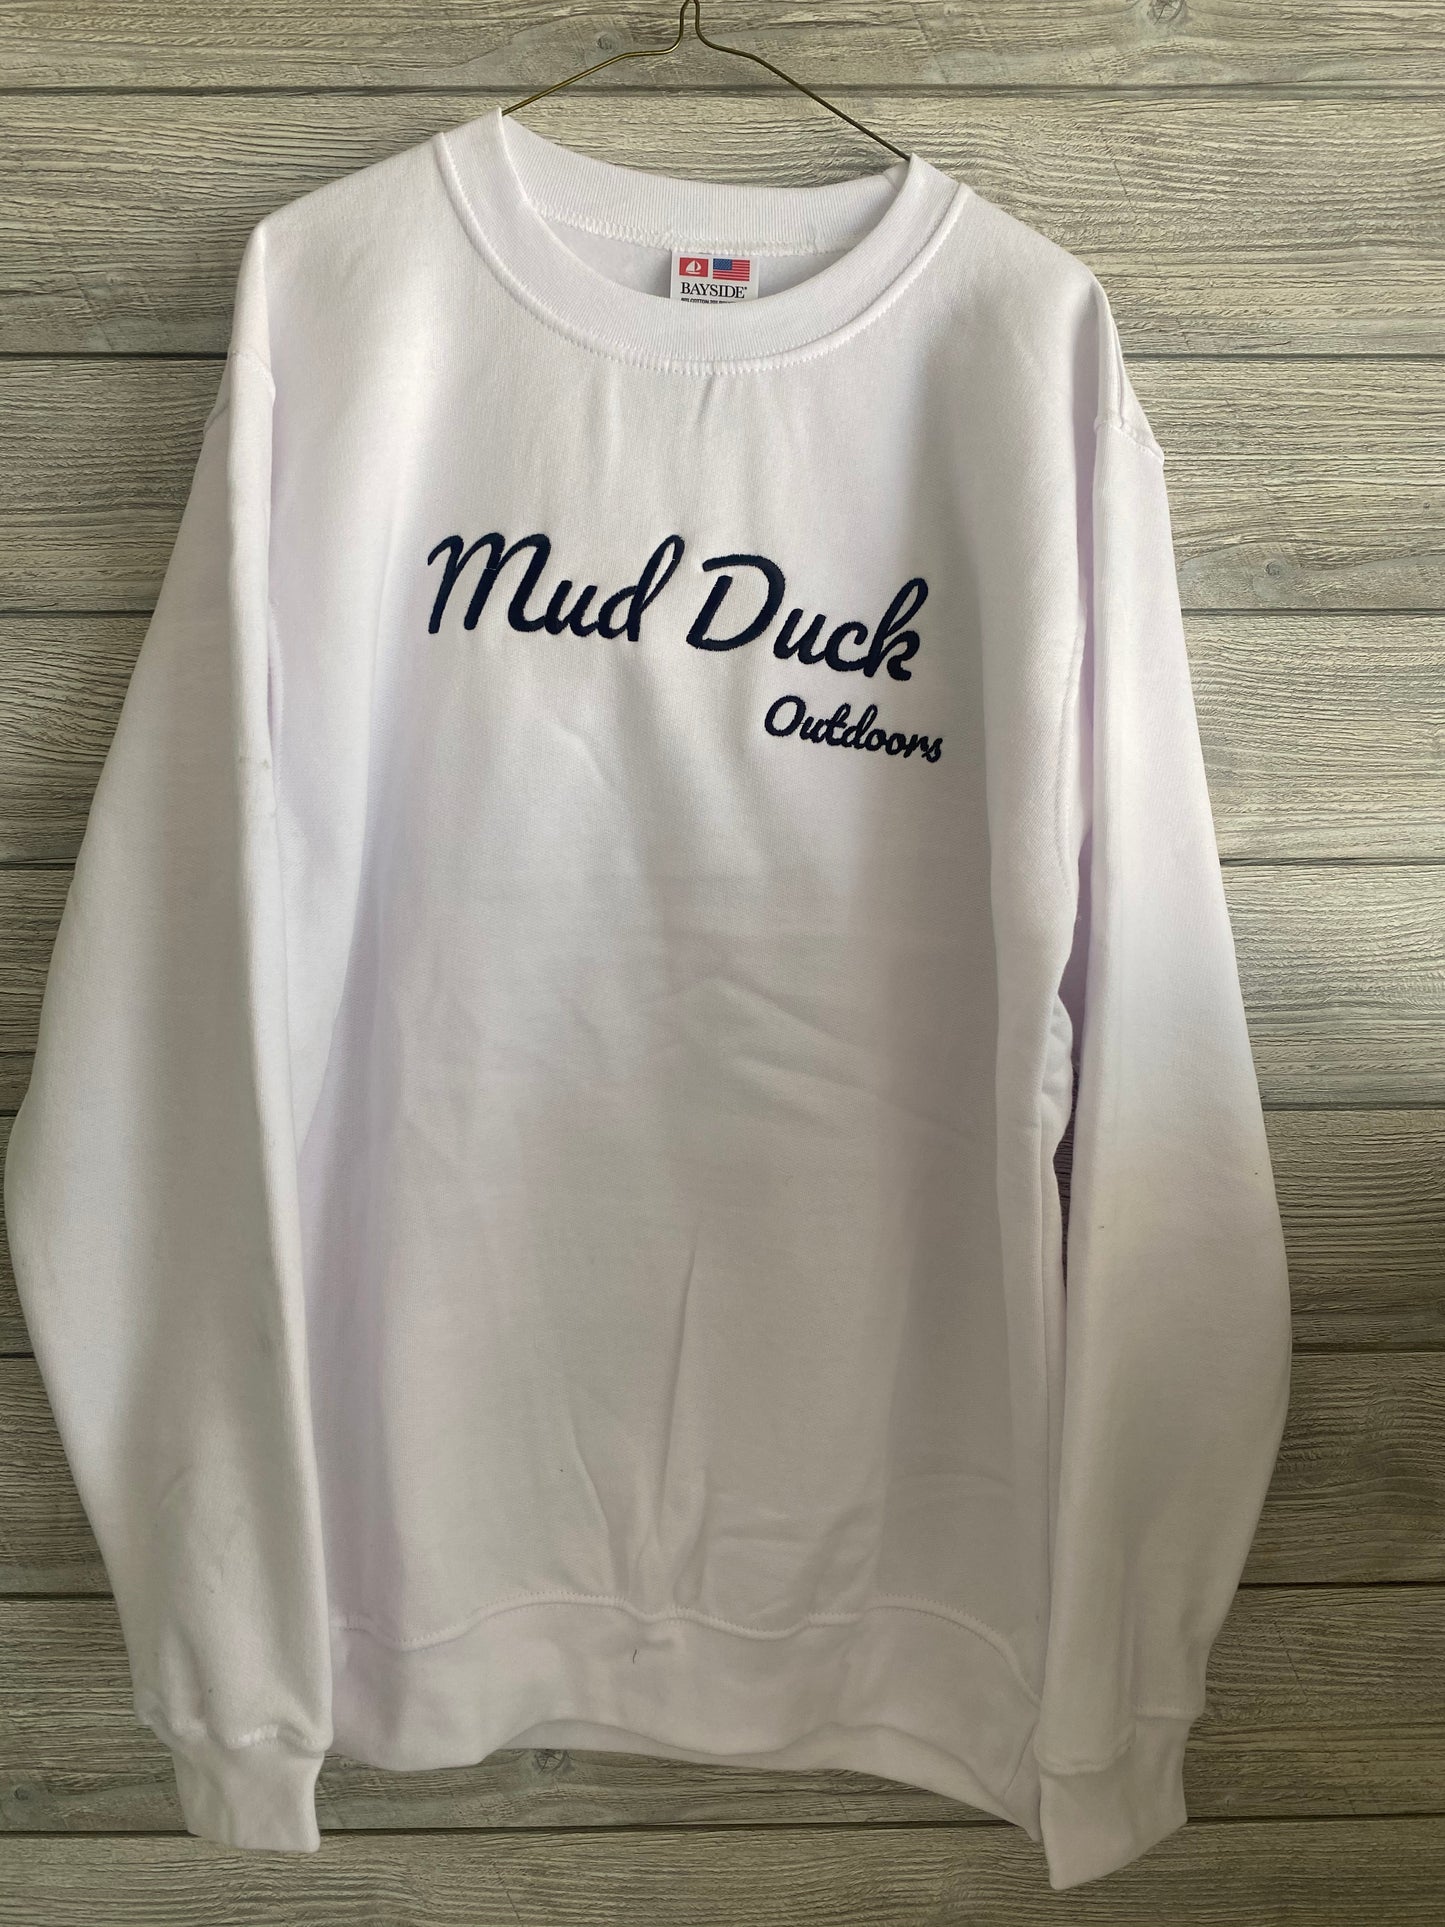 LIMITED EDITION - Mud Duck Outdoors Original CrewNeck - White - Original Mallard